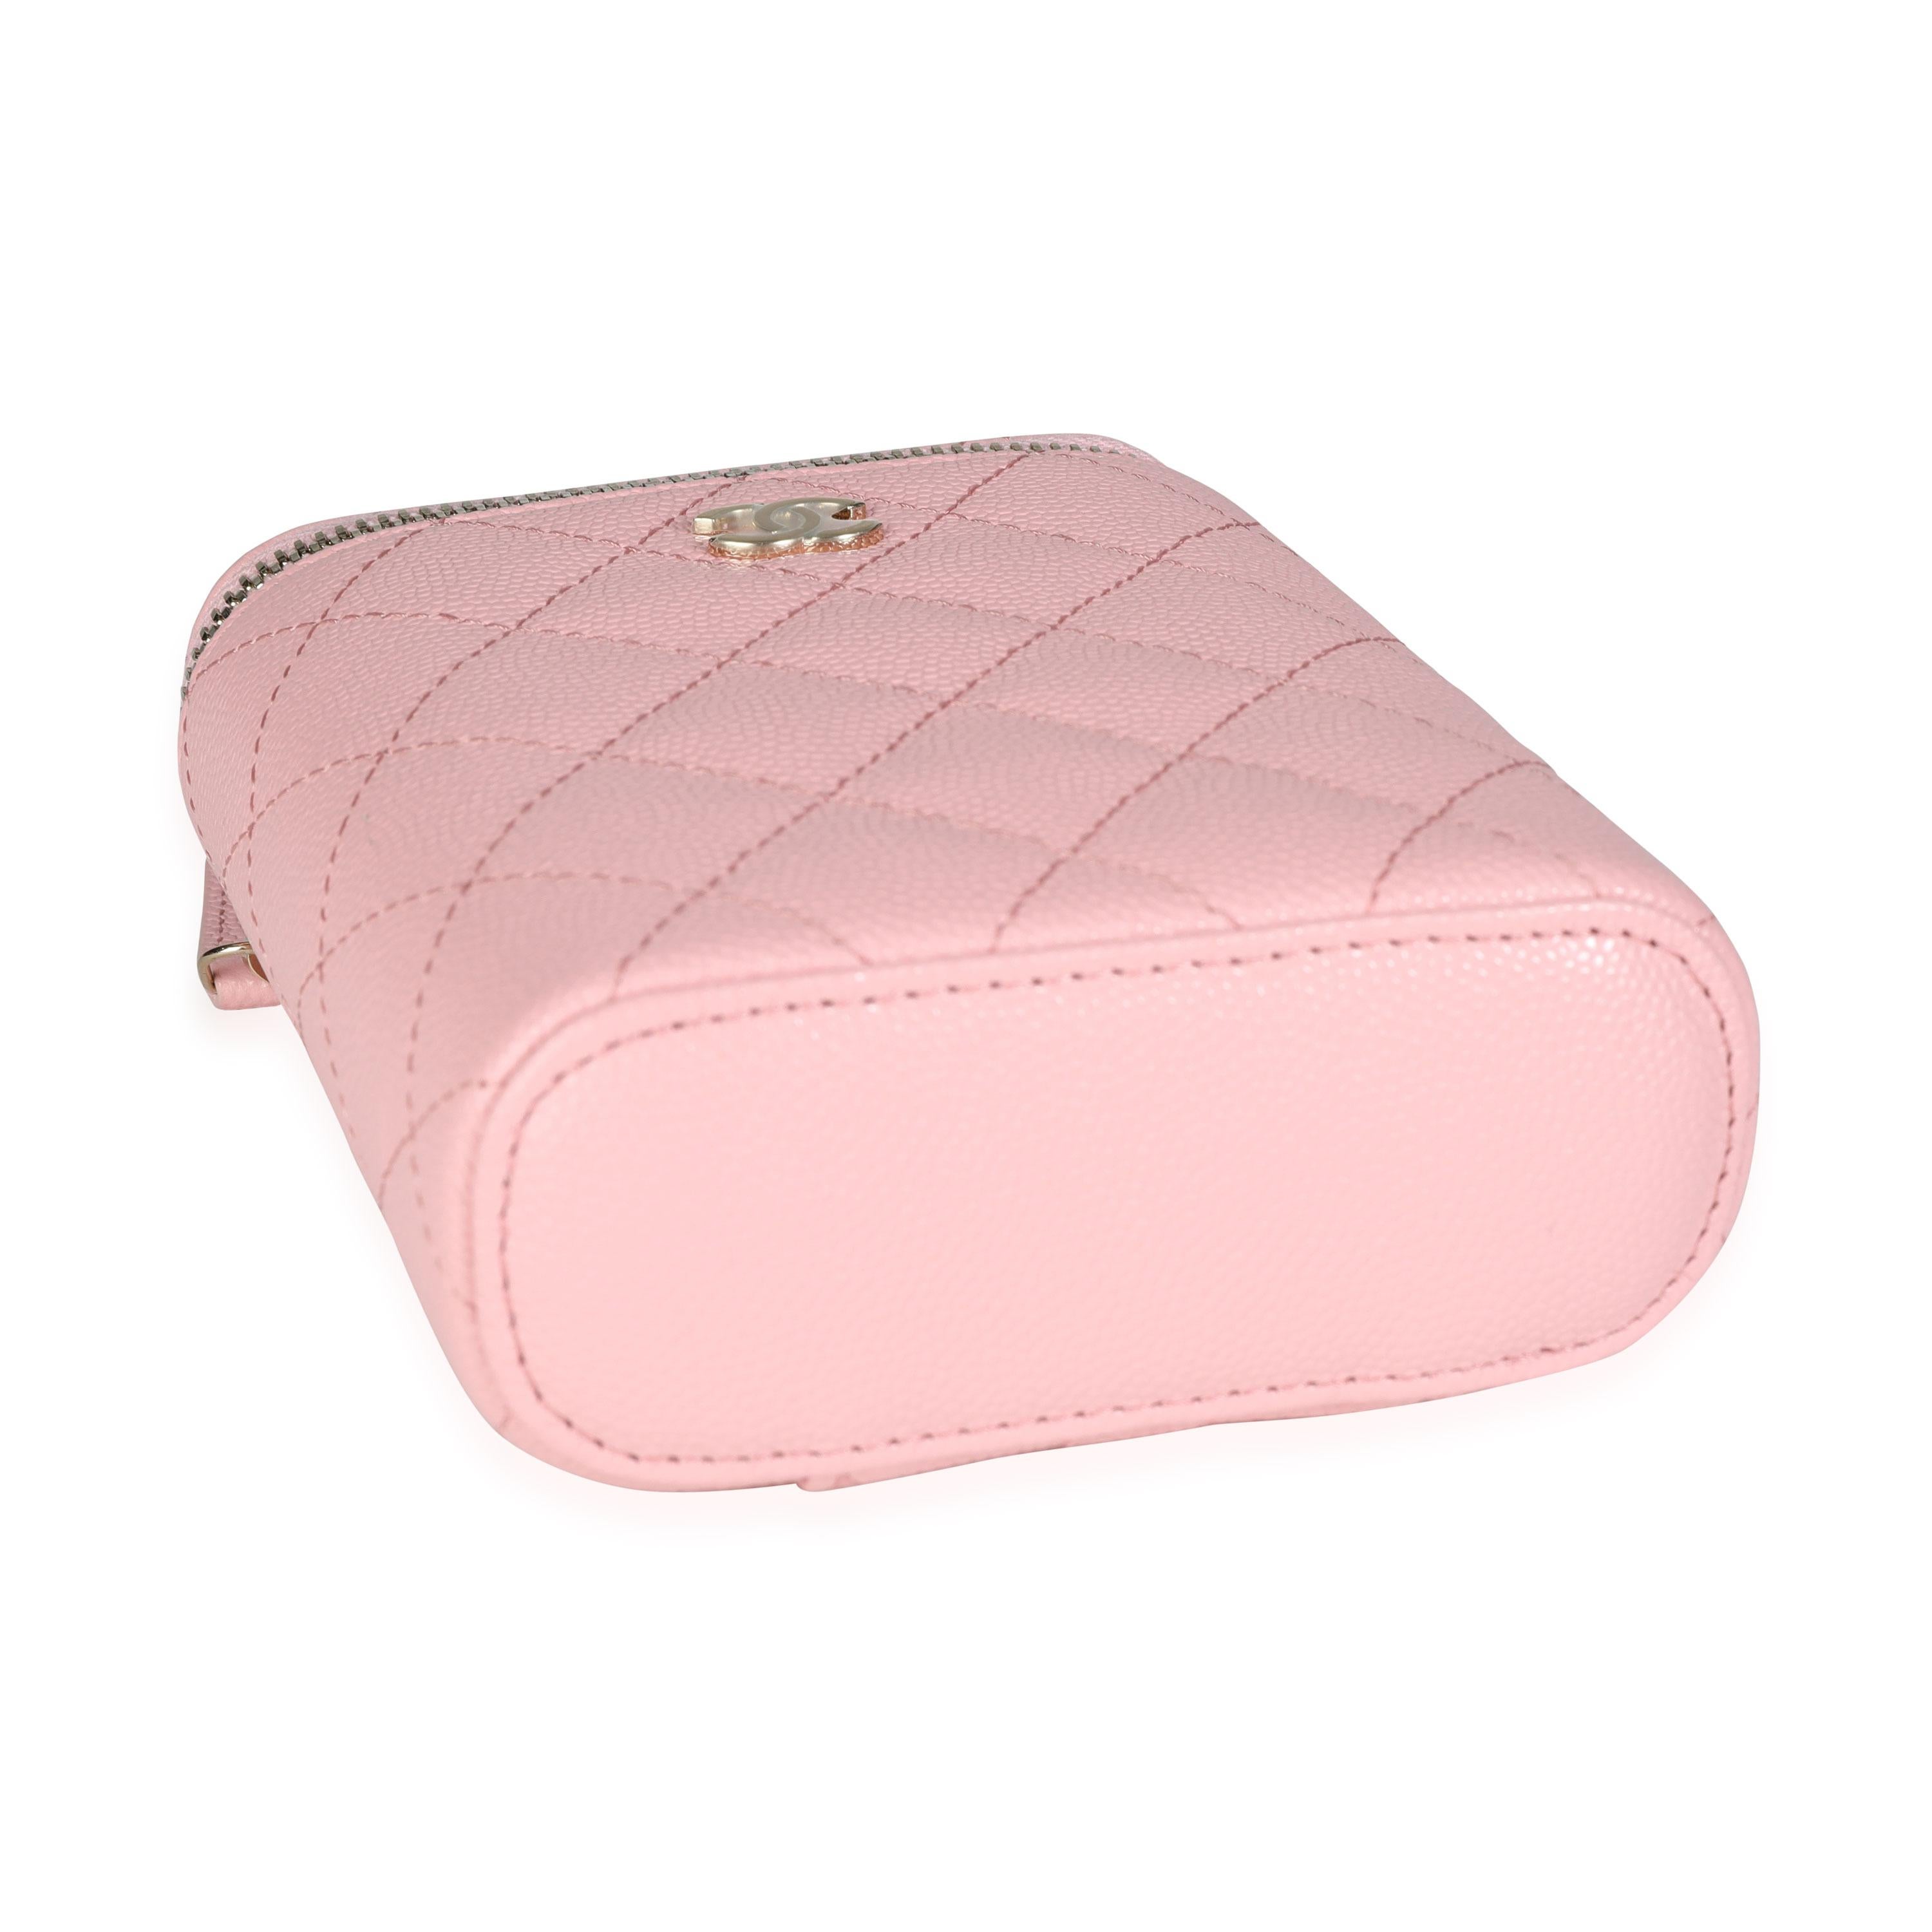 pink chanel vanity bag